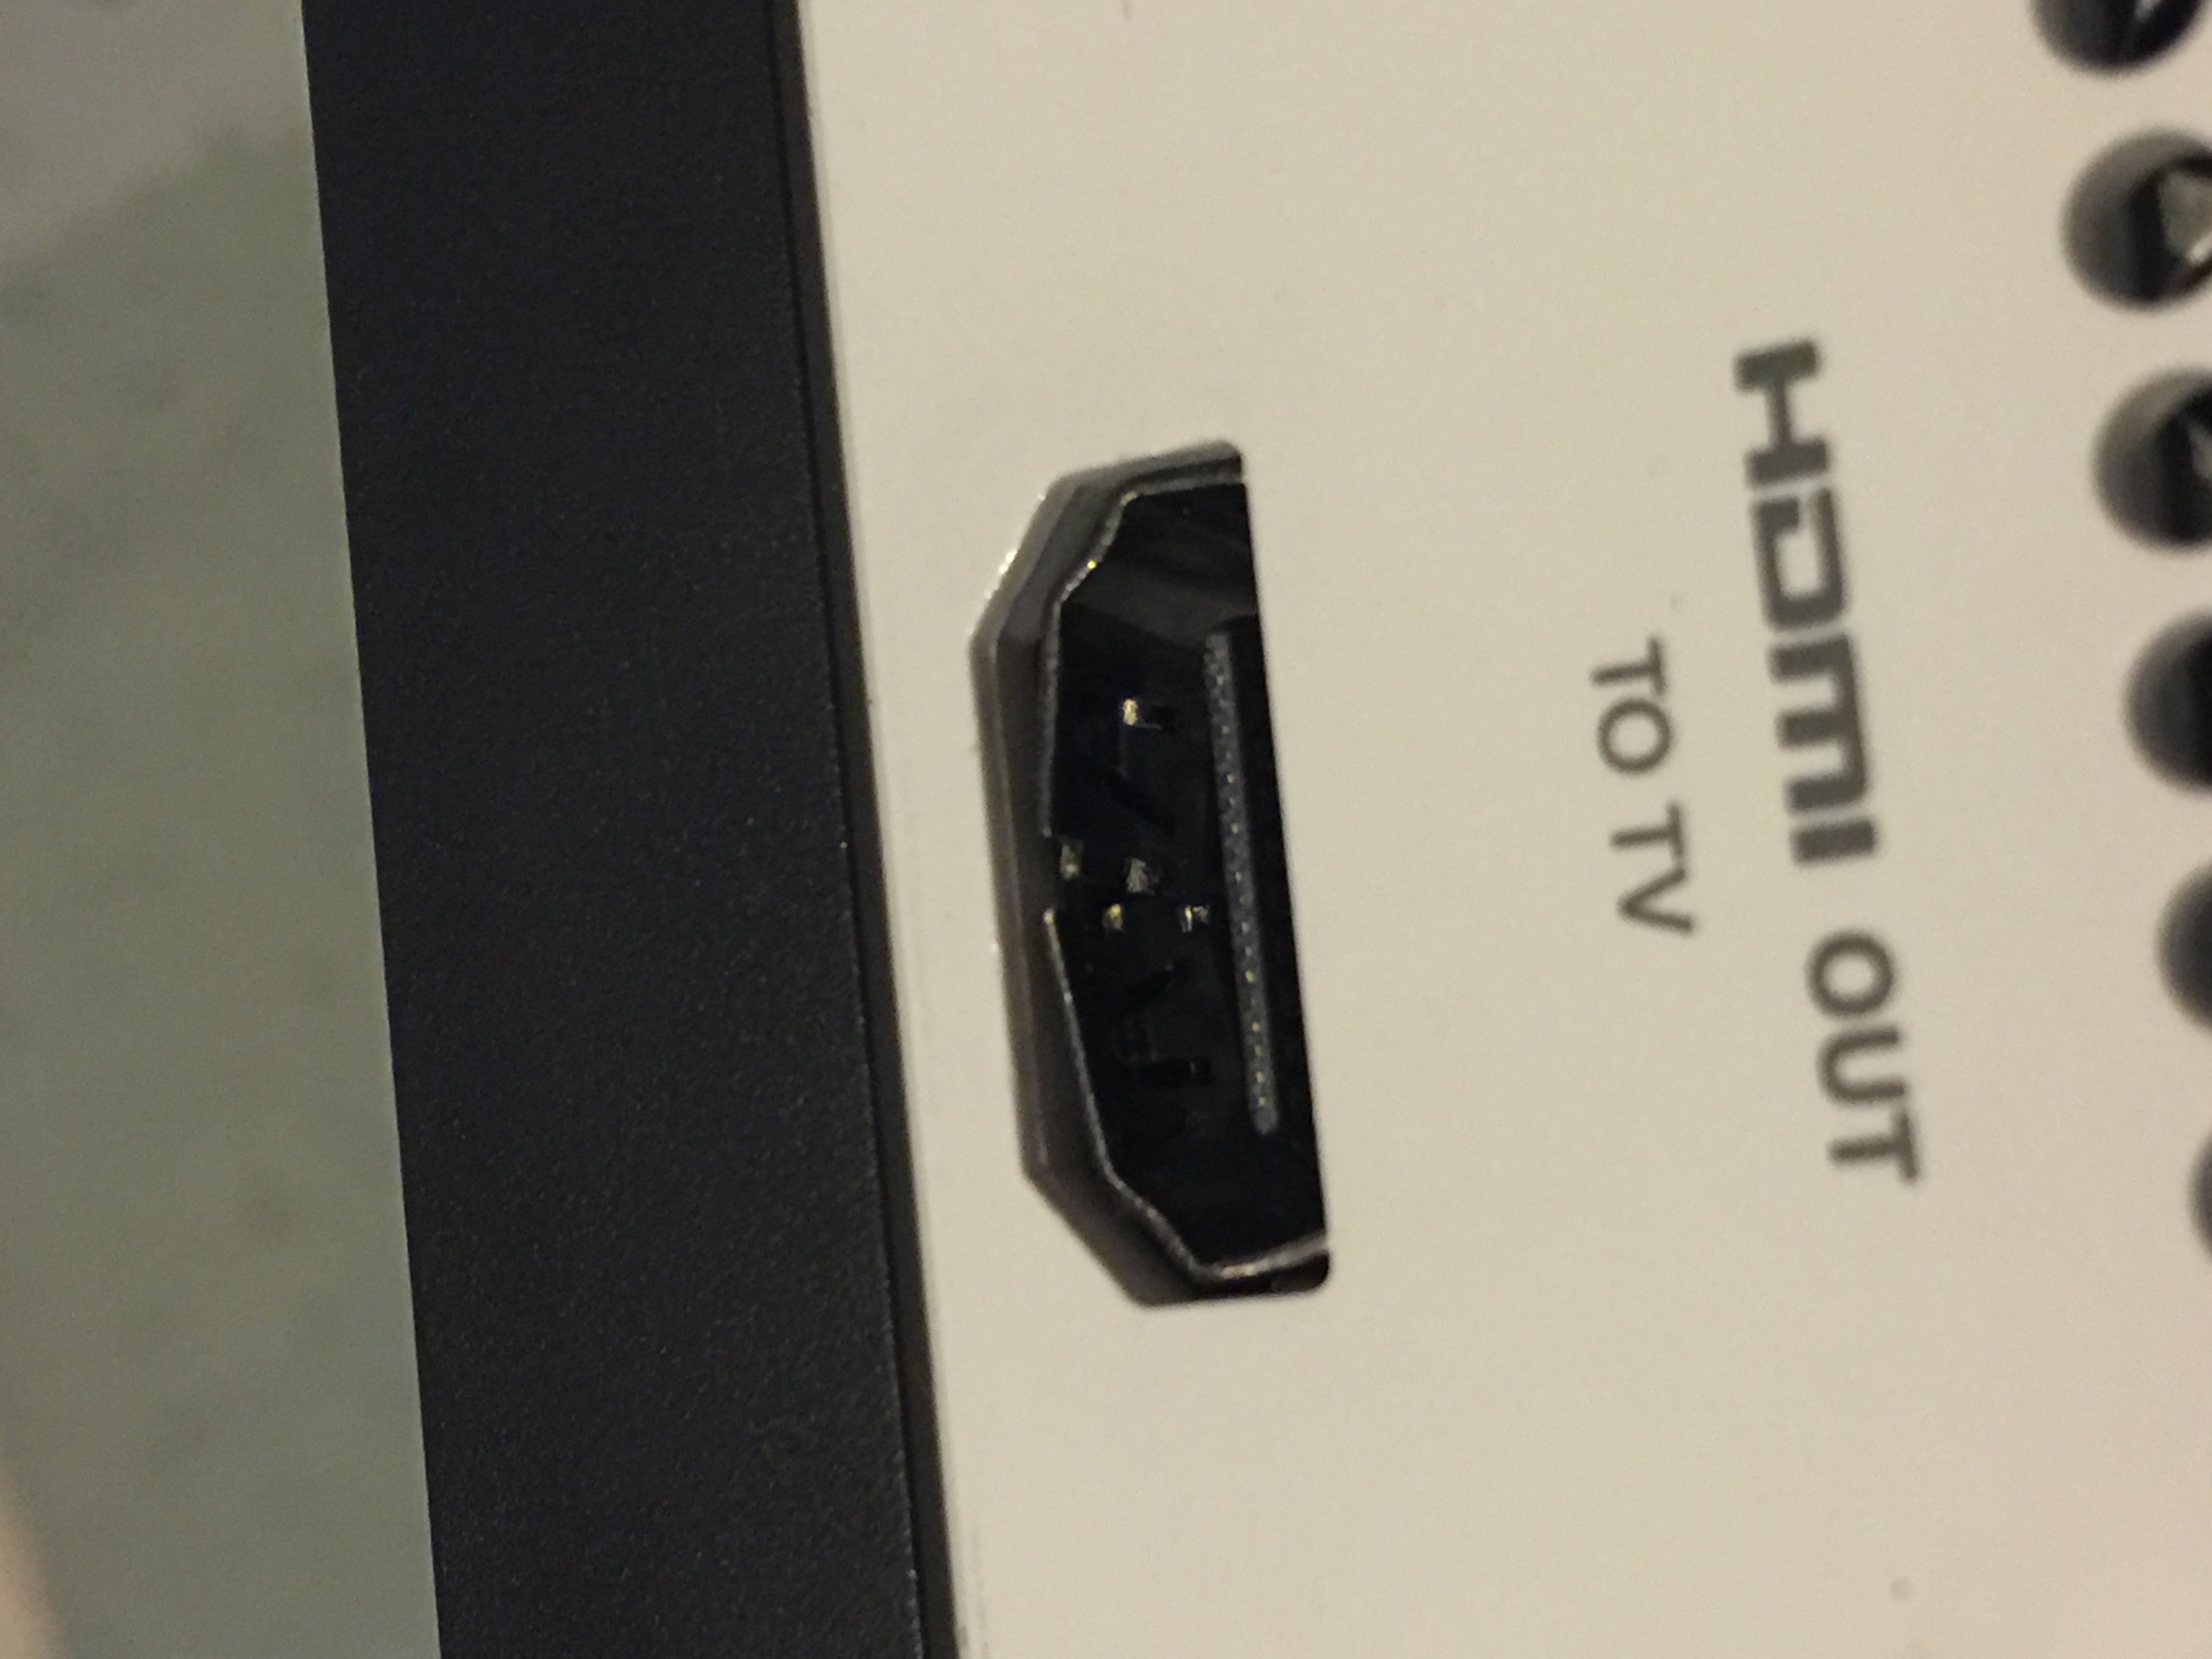 HMDI XBOX ONE S PORT NOT WORKING [​IMG]